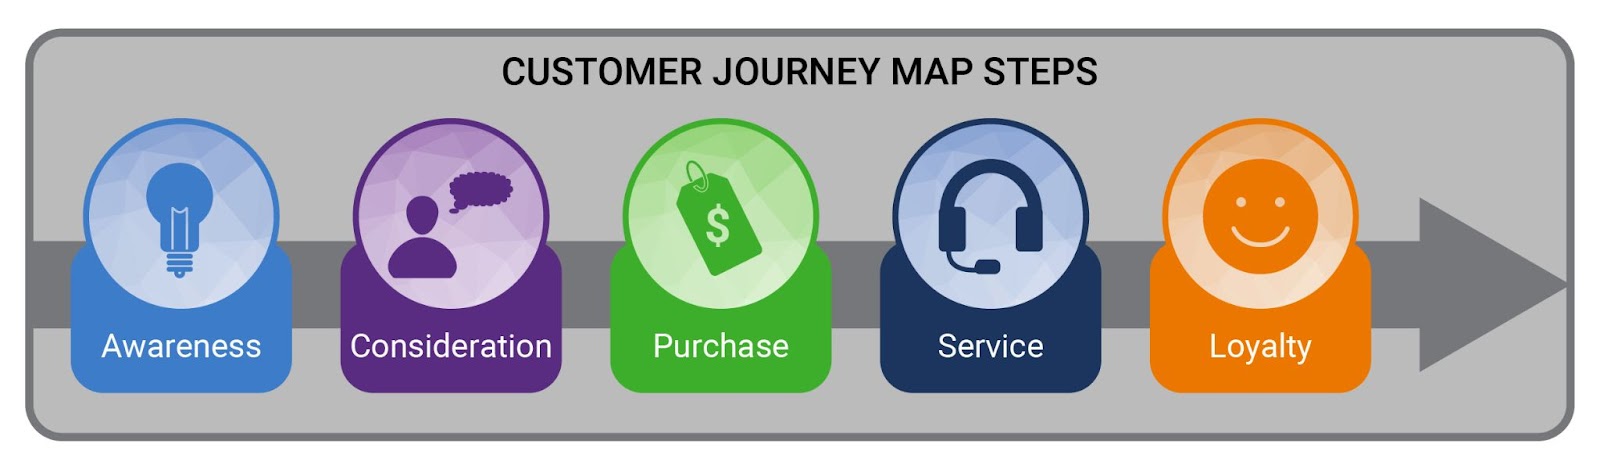 Customer Journey Map Steps